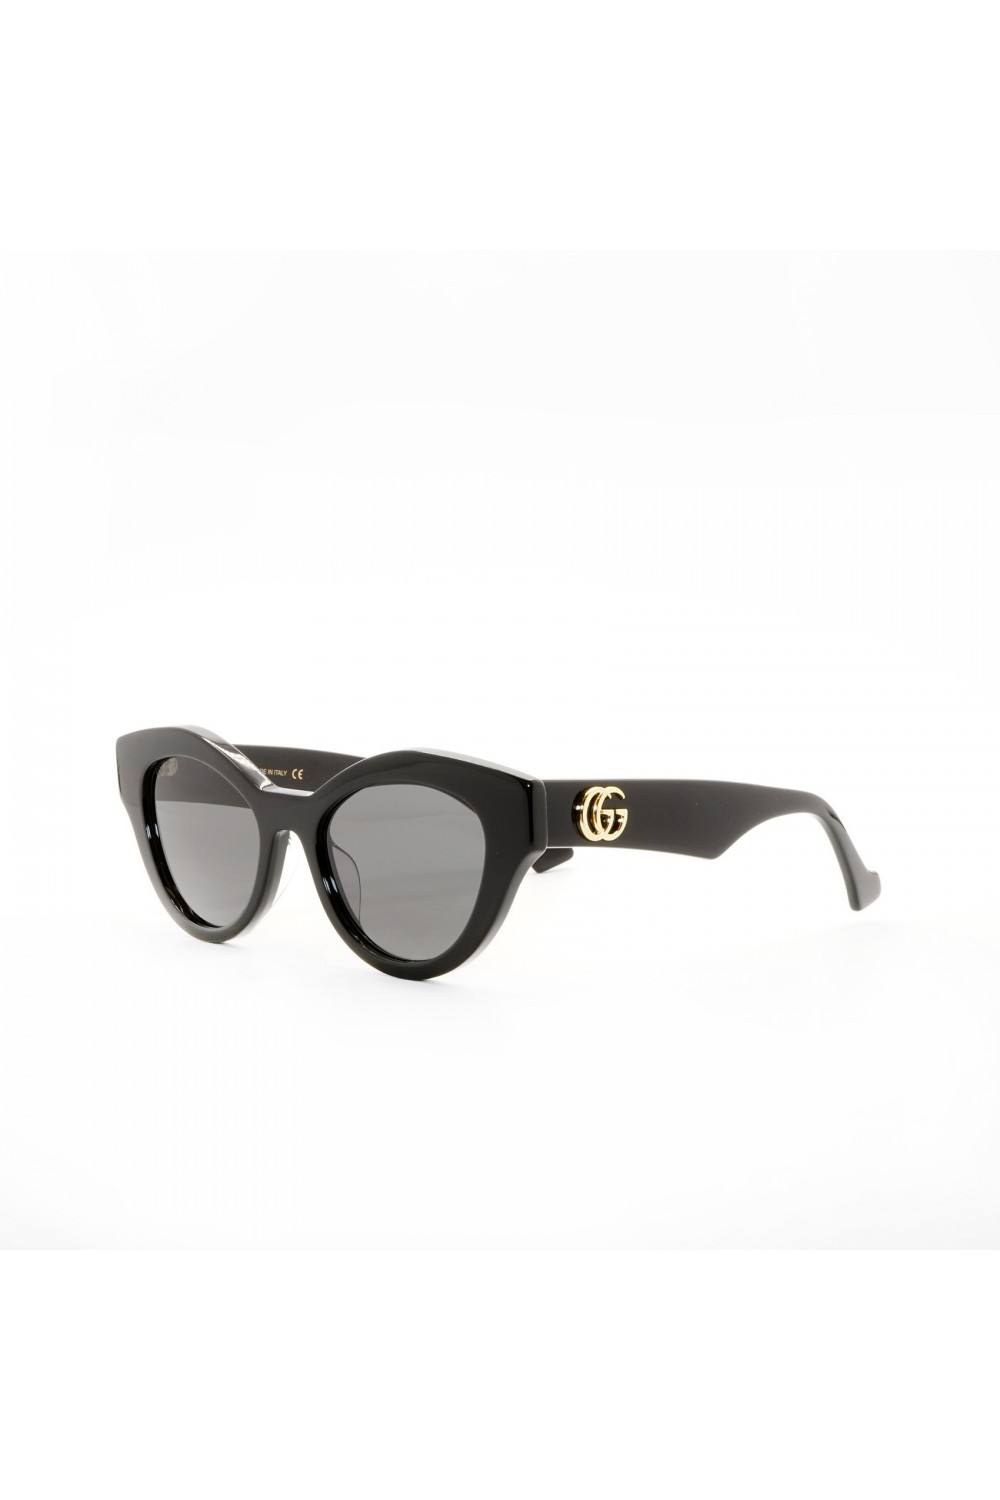 Gucci - Occhiali da sole in celluloide cat eye per donna nero - GG0957 002